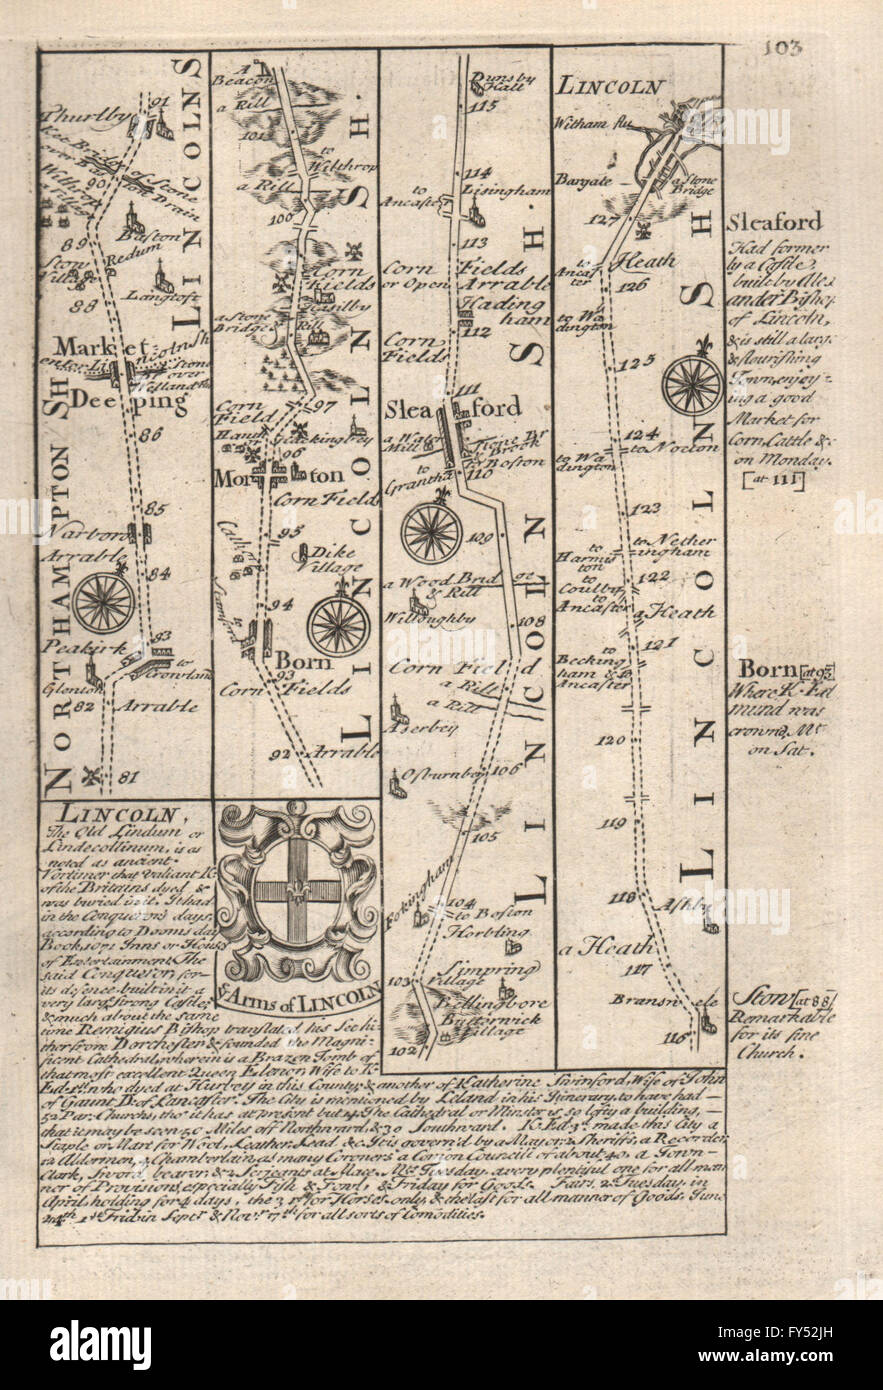 Market Deeping-Thurlby-Morton-Sleaford-Lincoln road map by OWEN & BOWEN 1753 Stock Photo